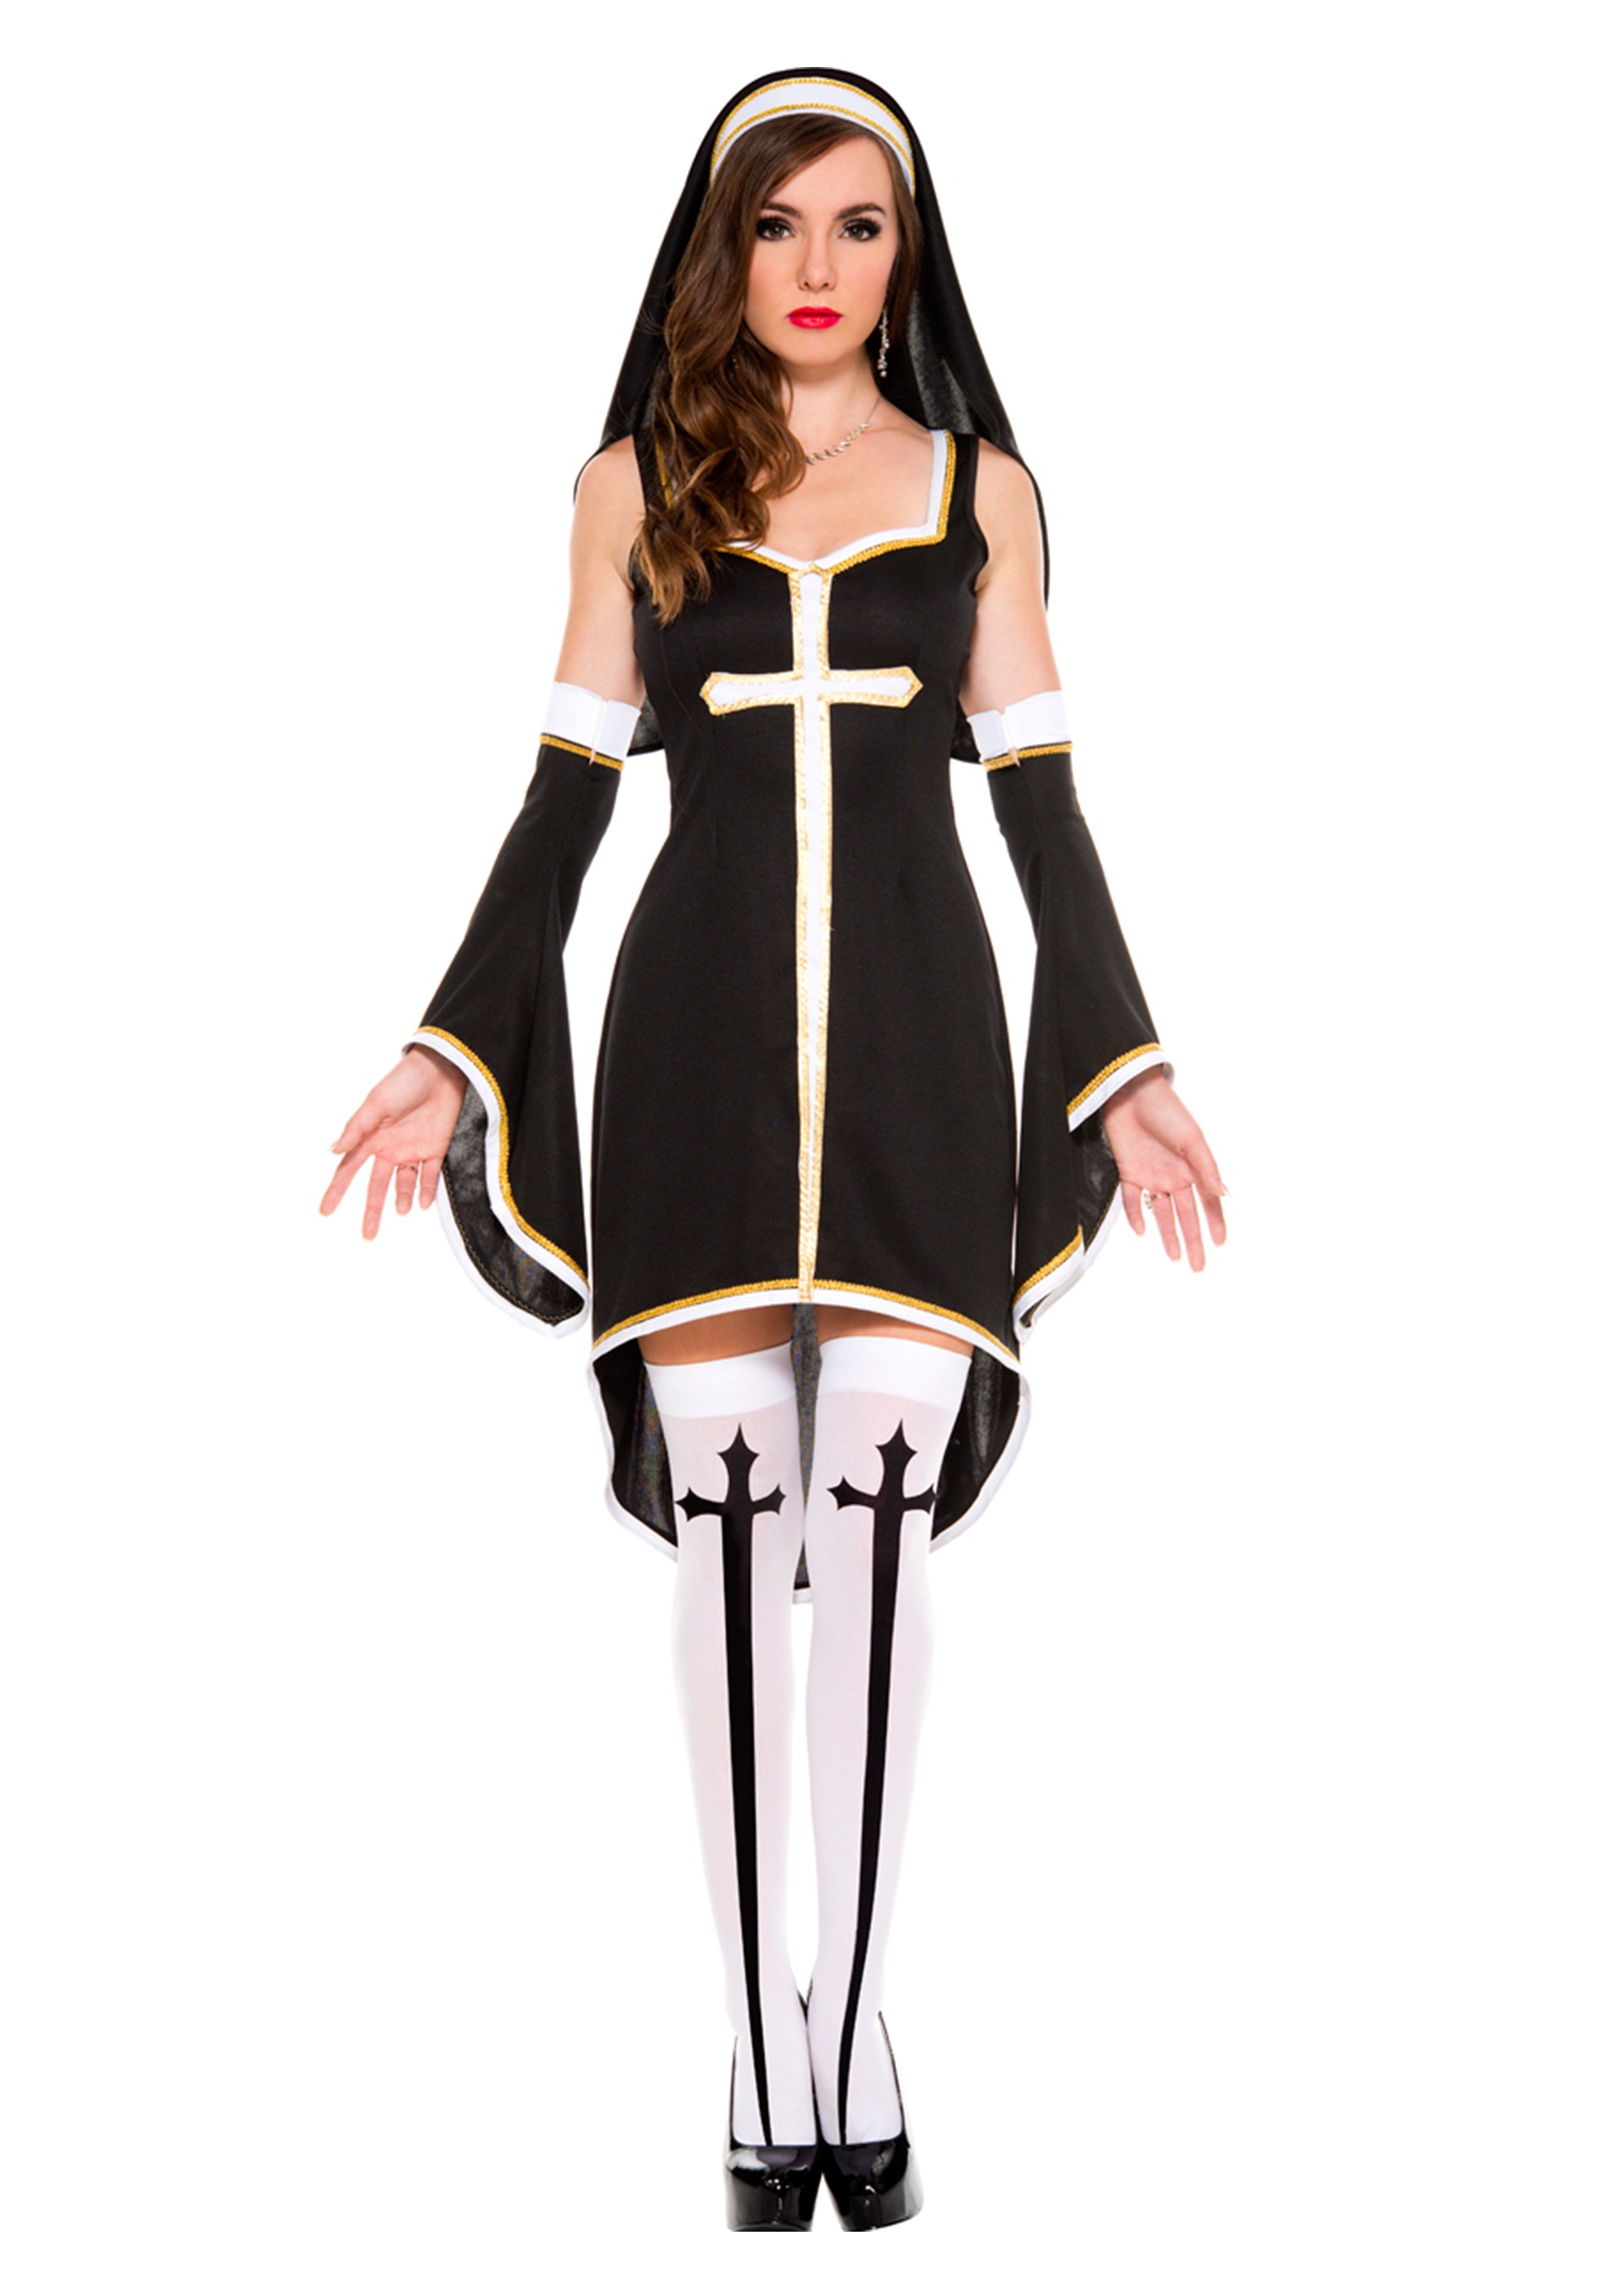 Women’s Sinfully Hot Nun Costume